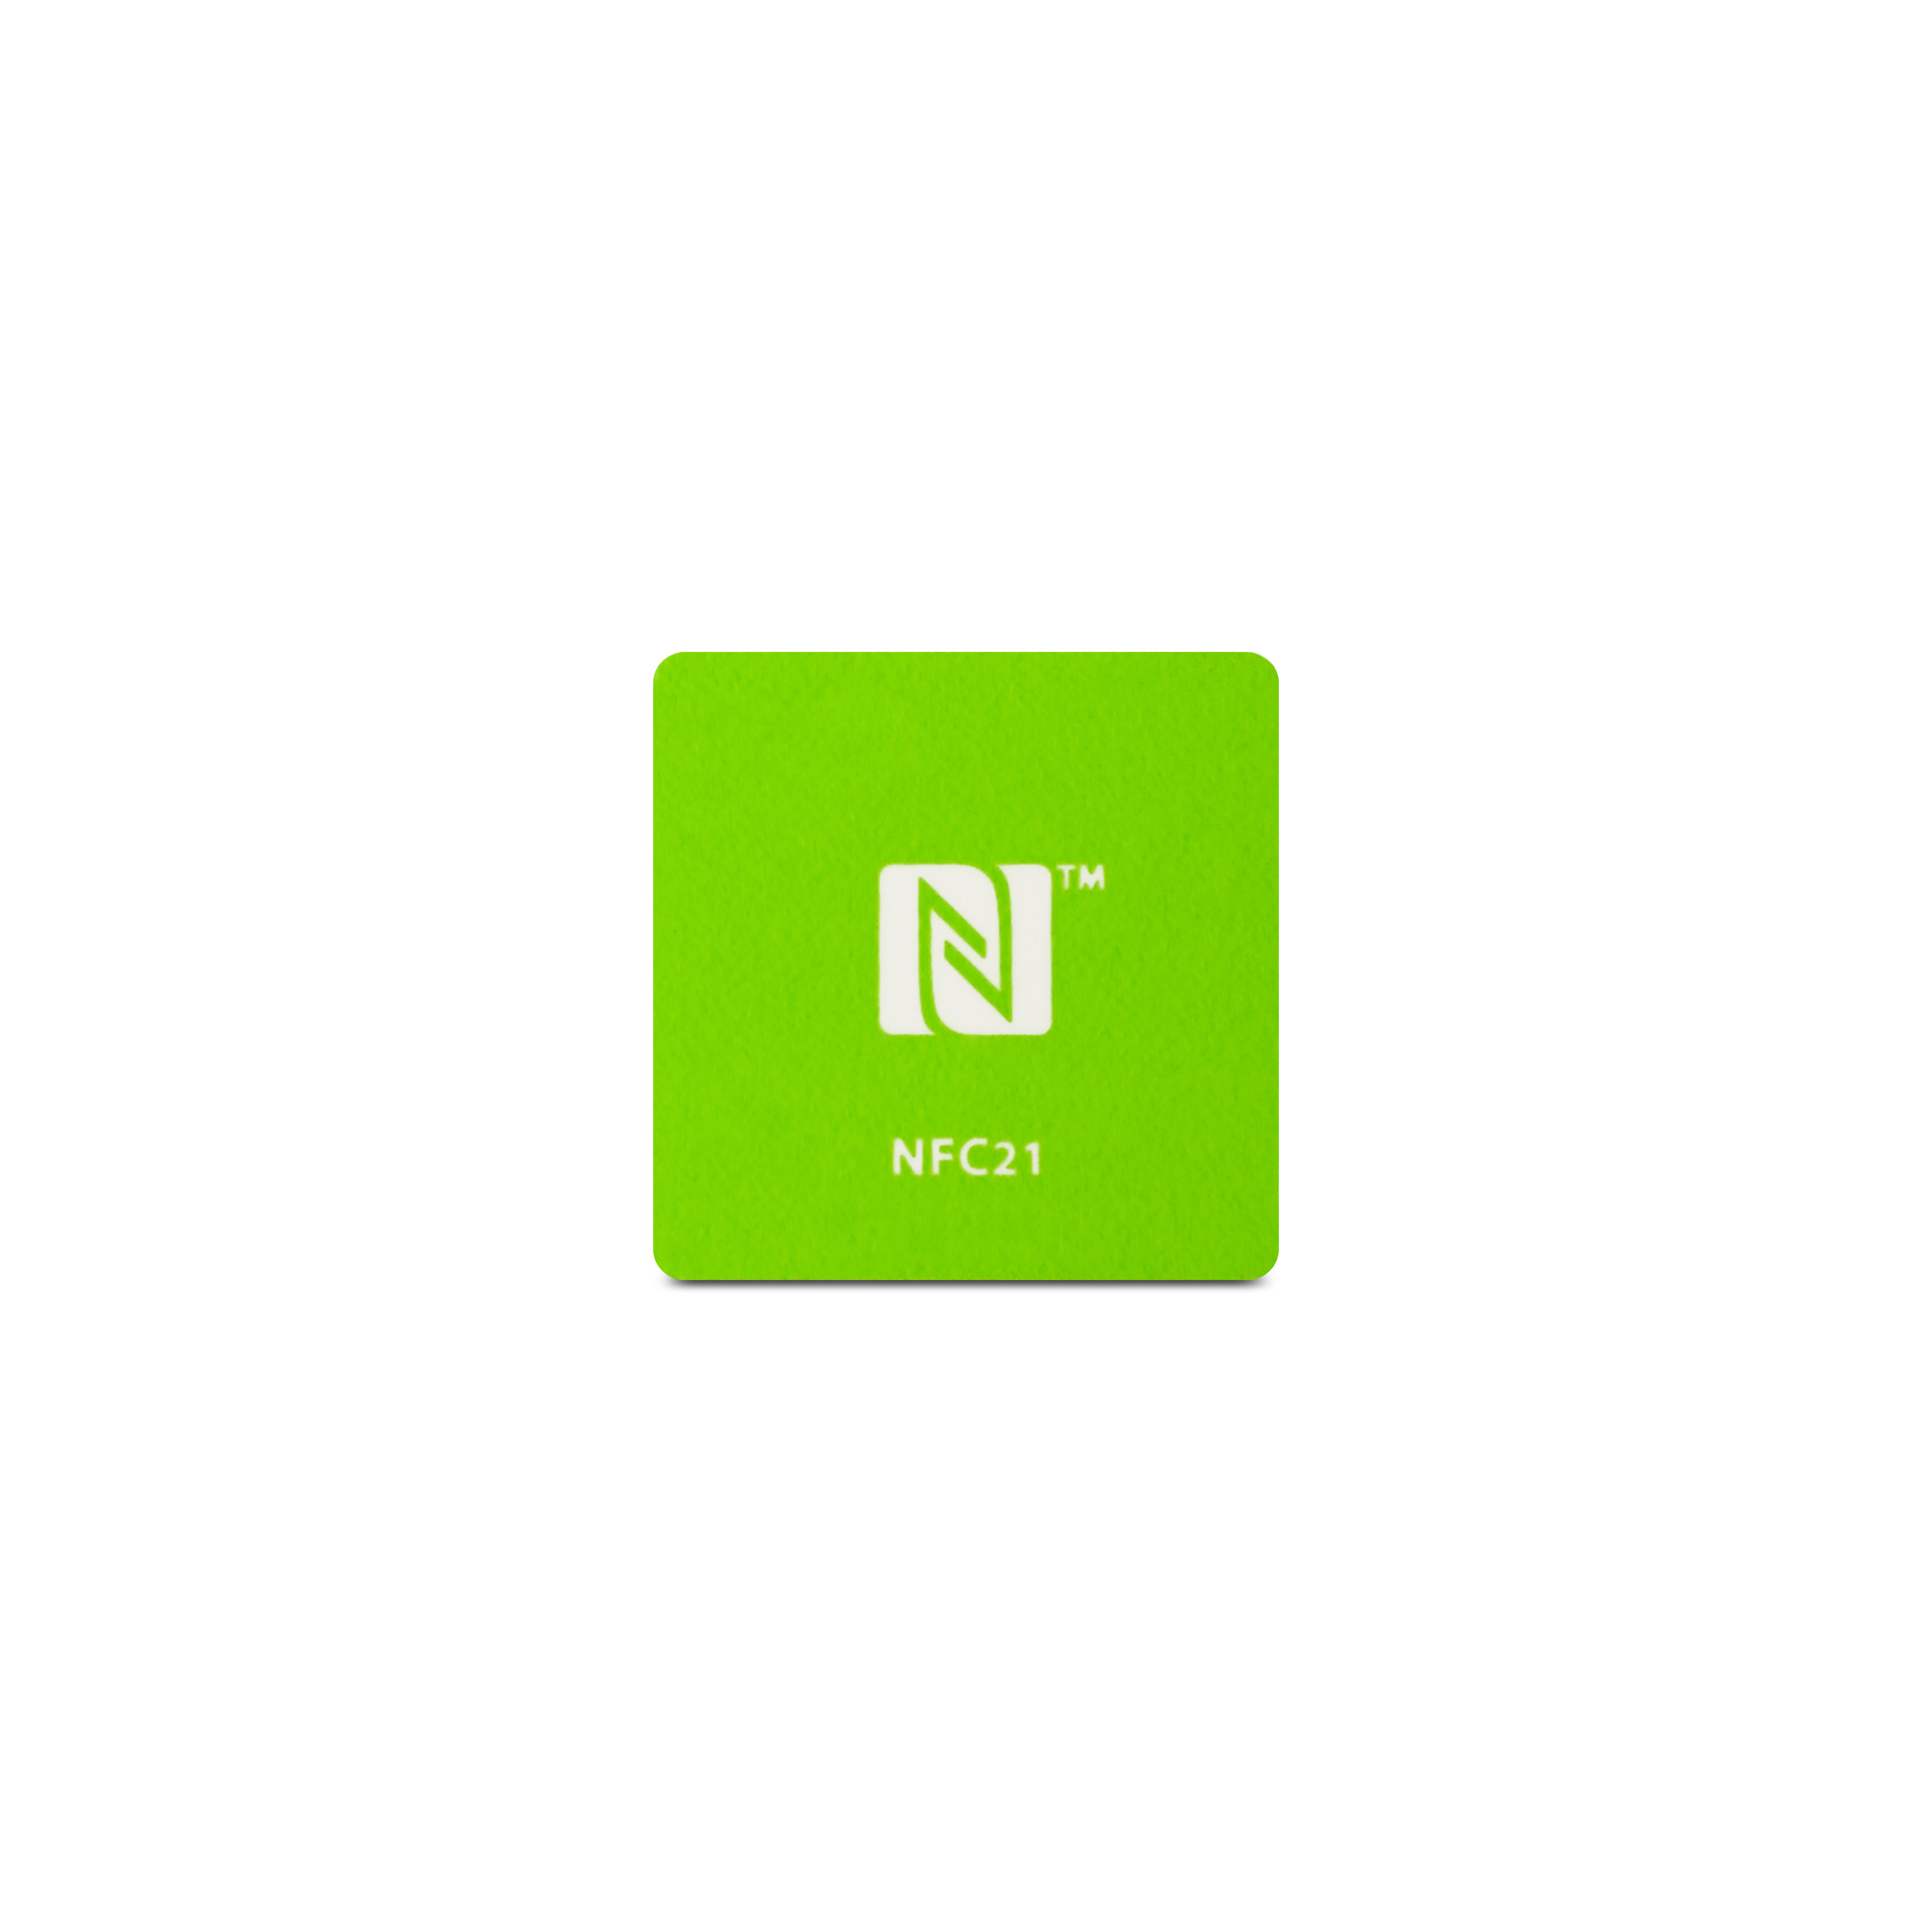 Vorderseite des NFC Magneten aus grünem PET